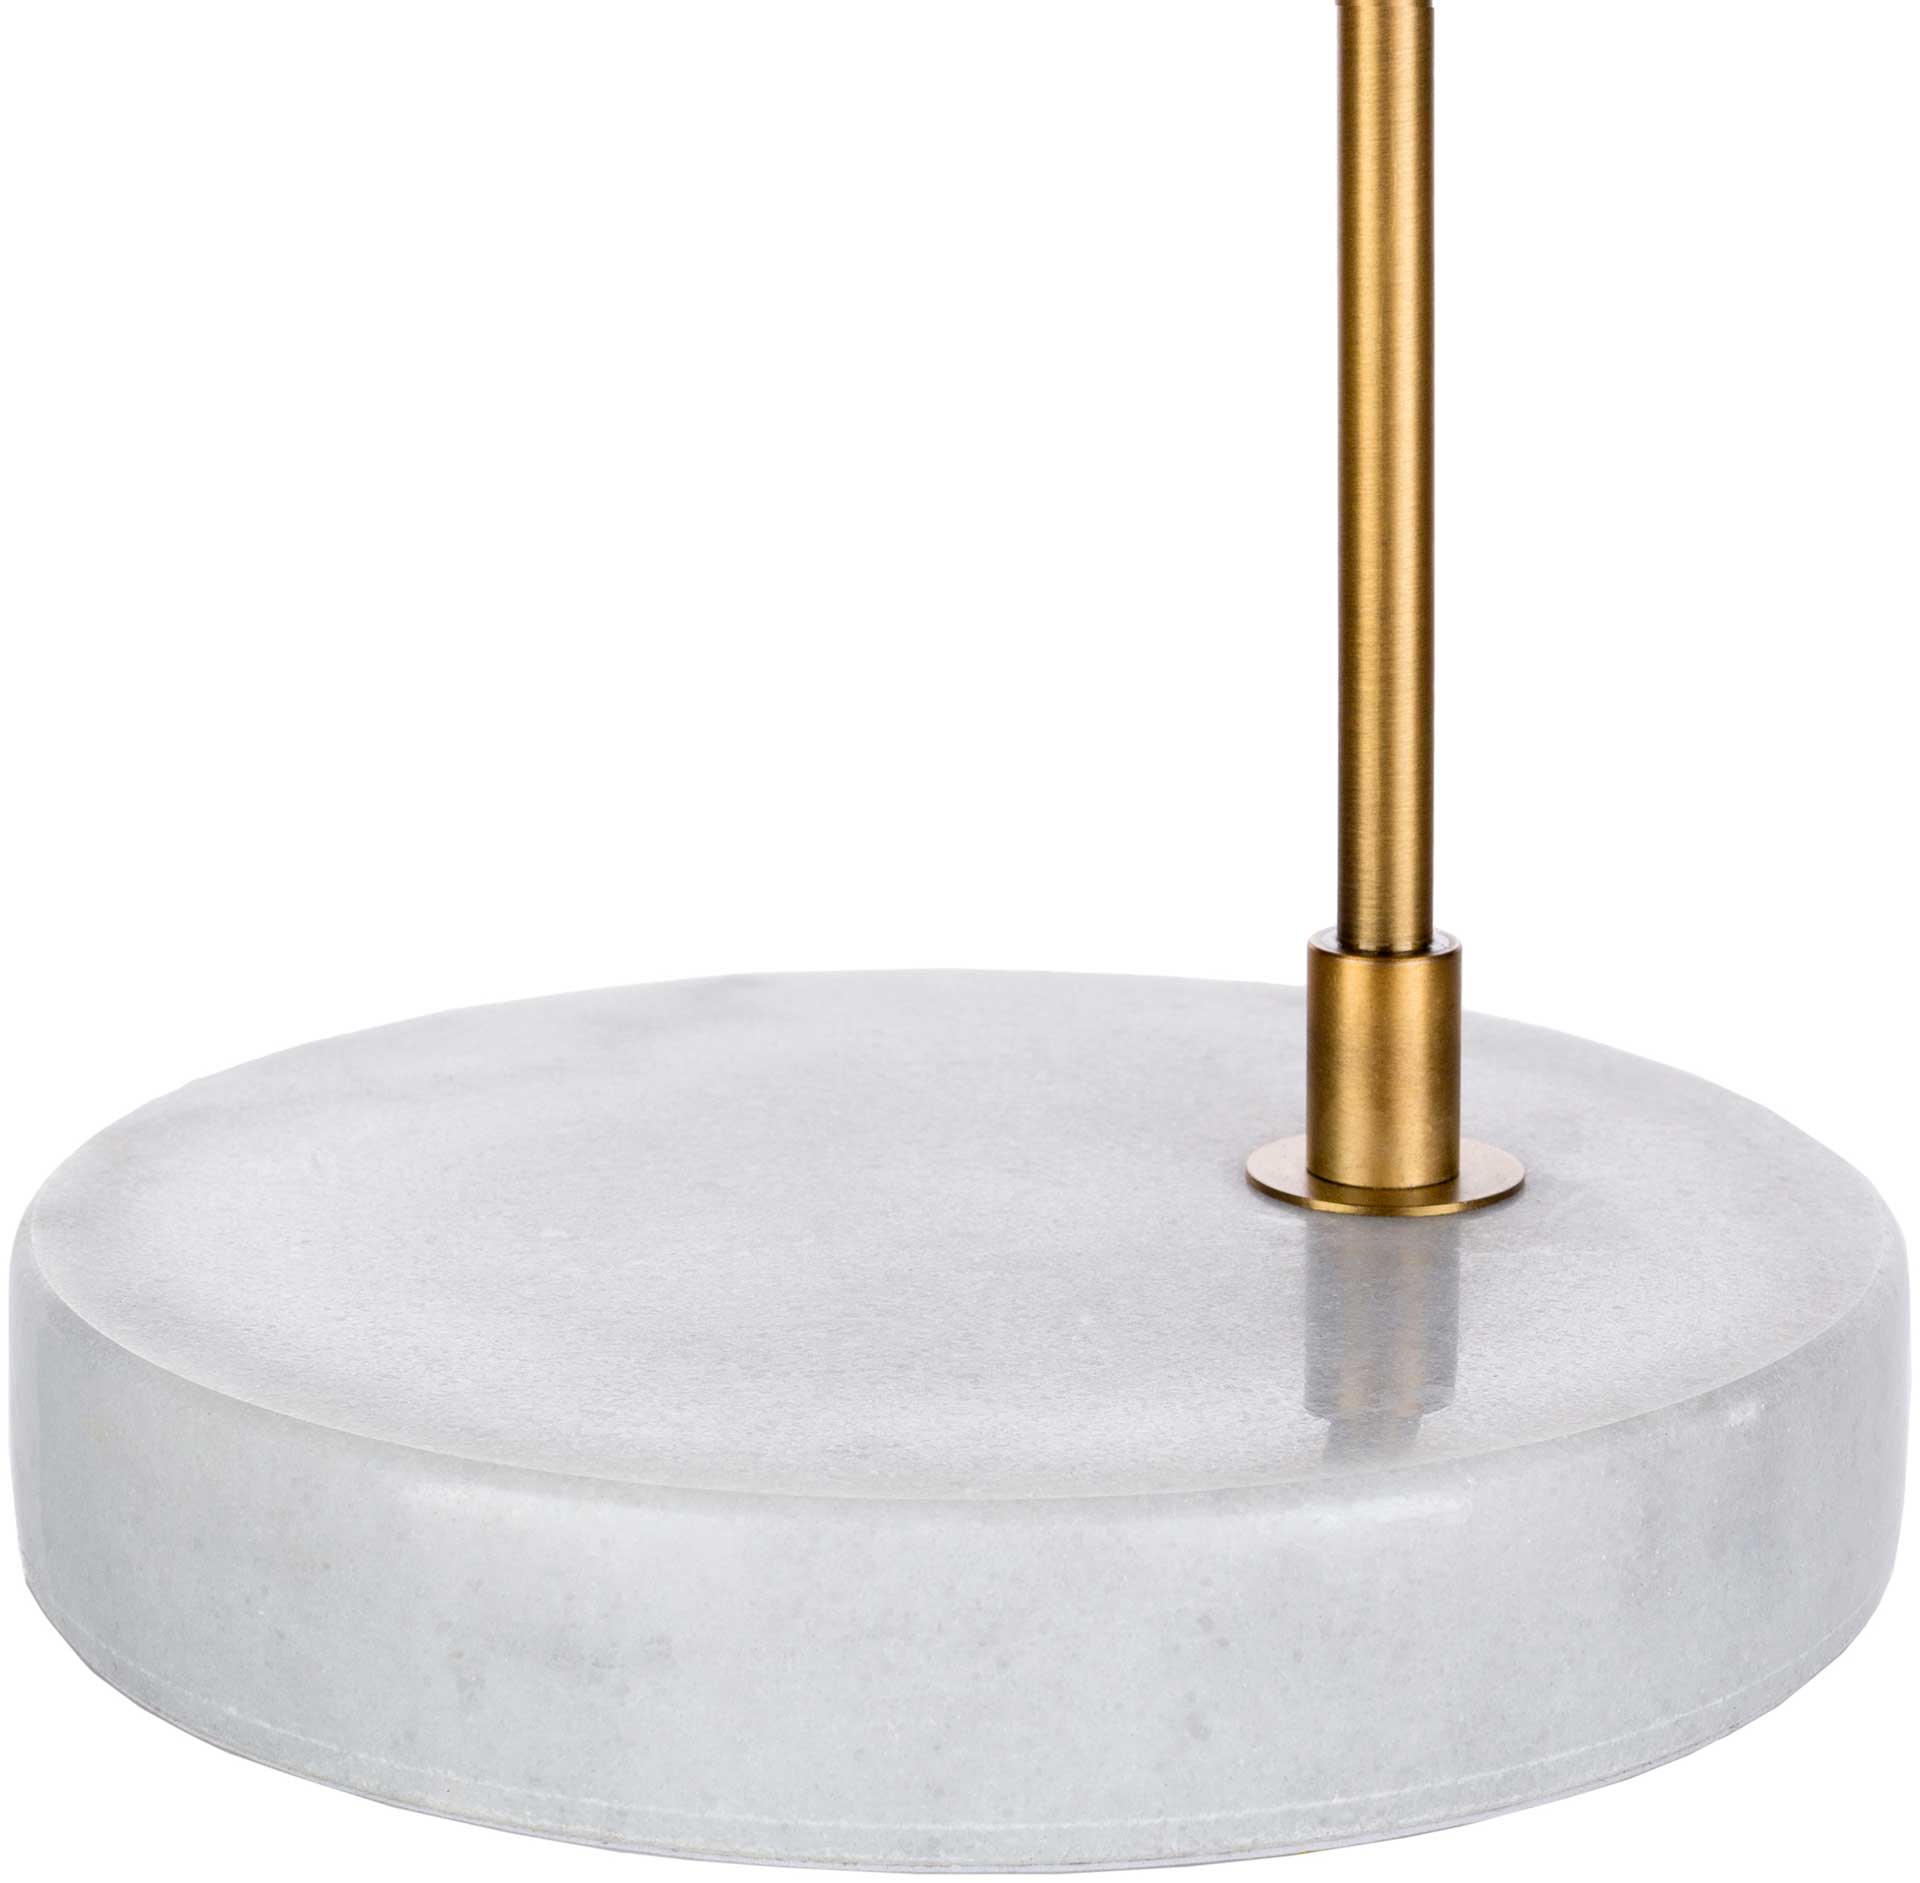 Hunter Table Lamp Brass